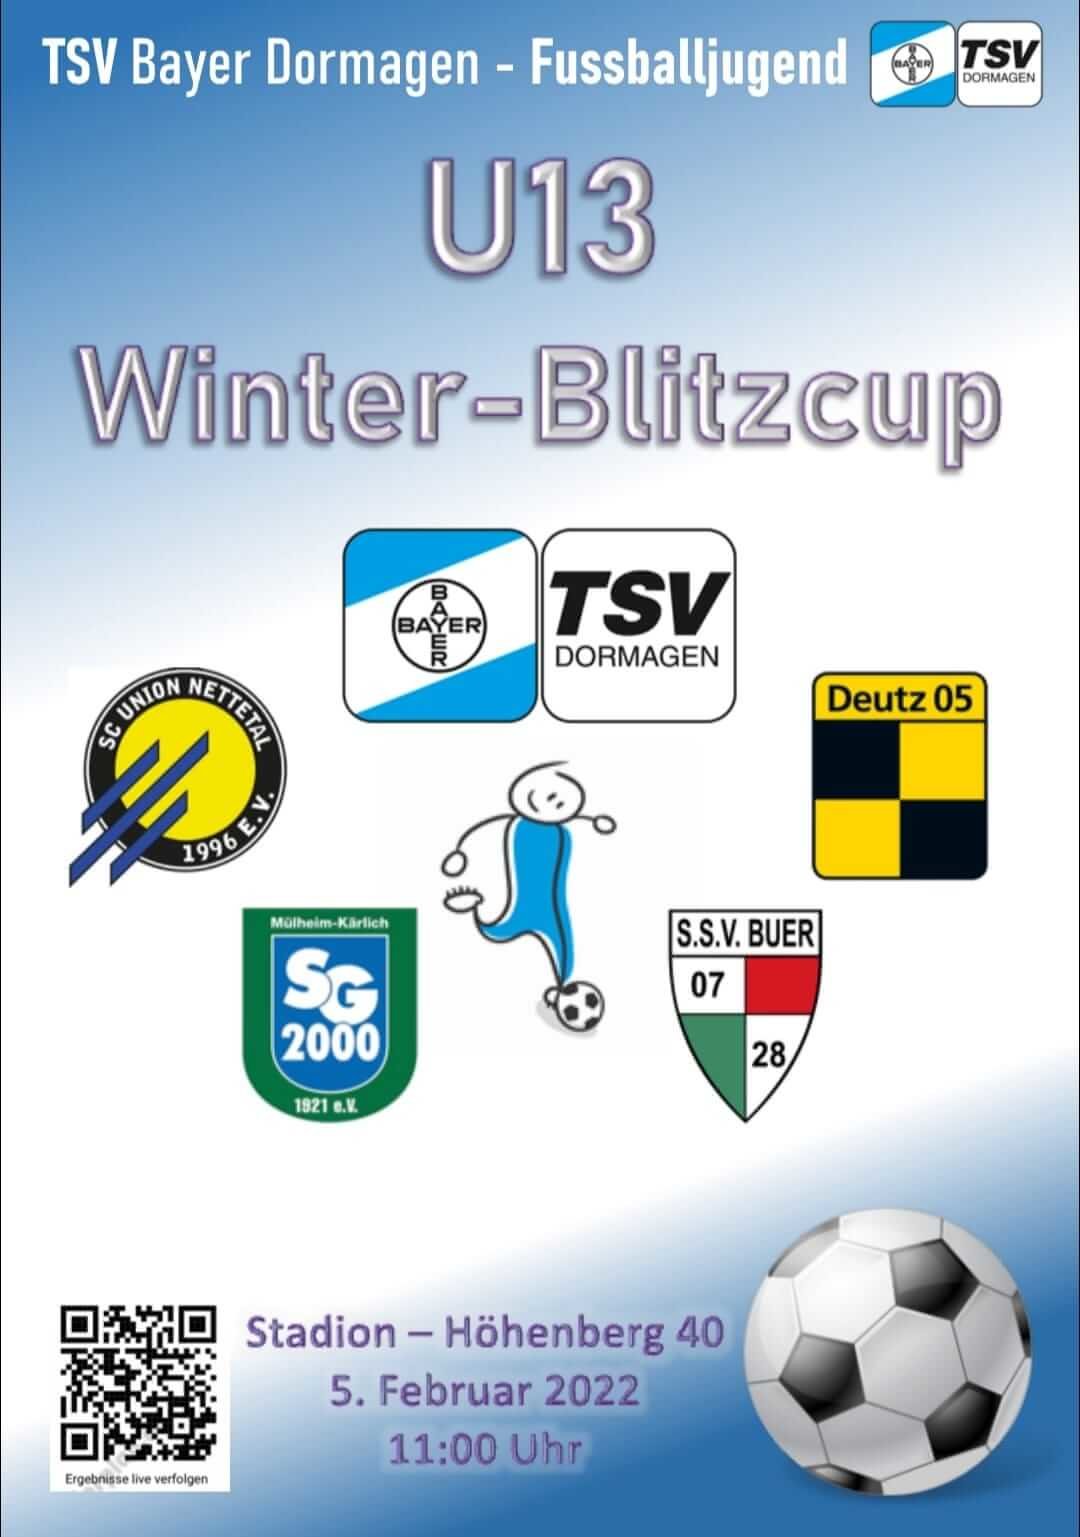 U13 Winter Blitzcup TSV Bayer Dormagen 1920 e.V.